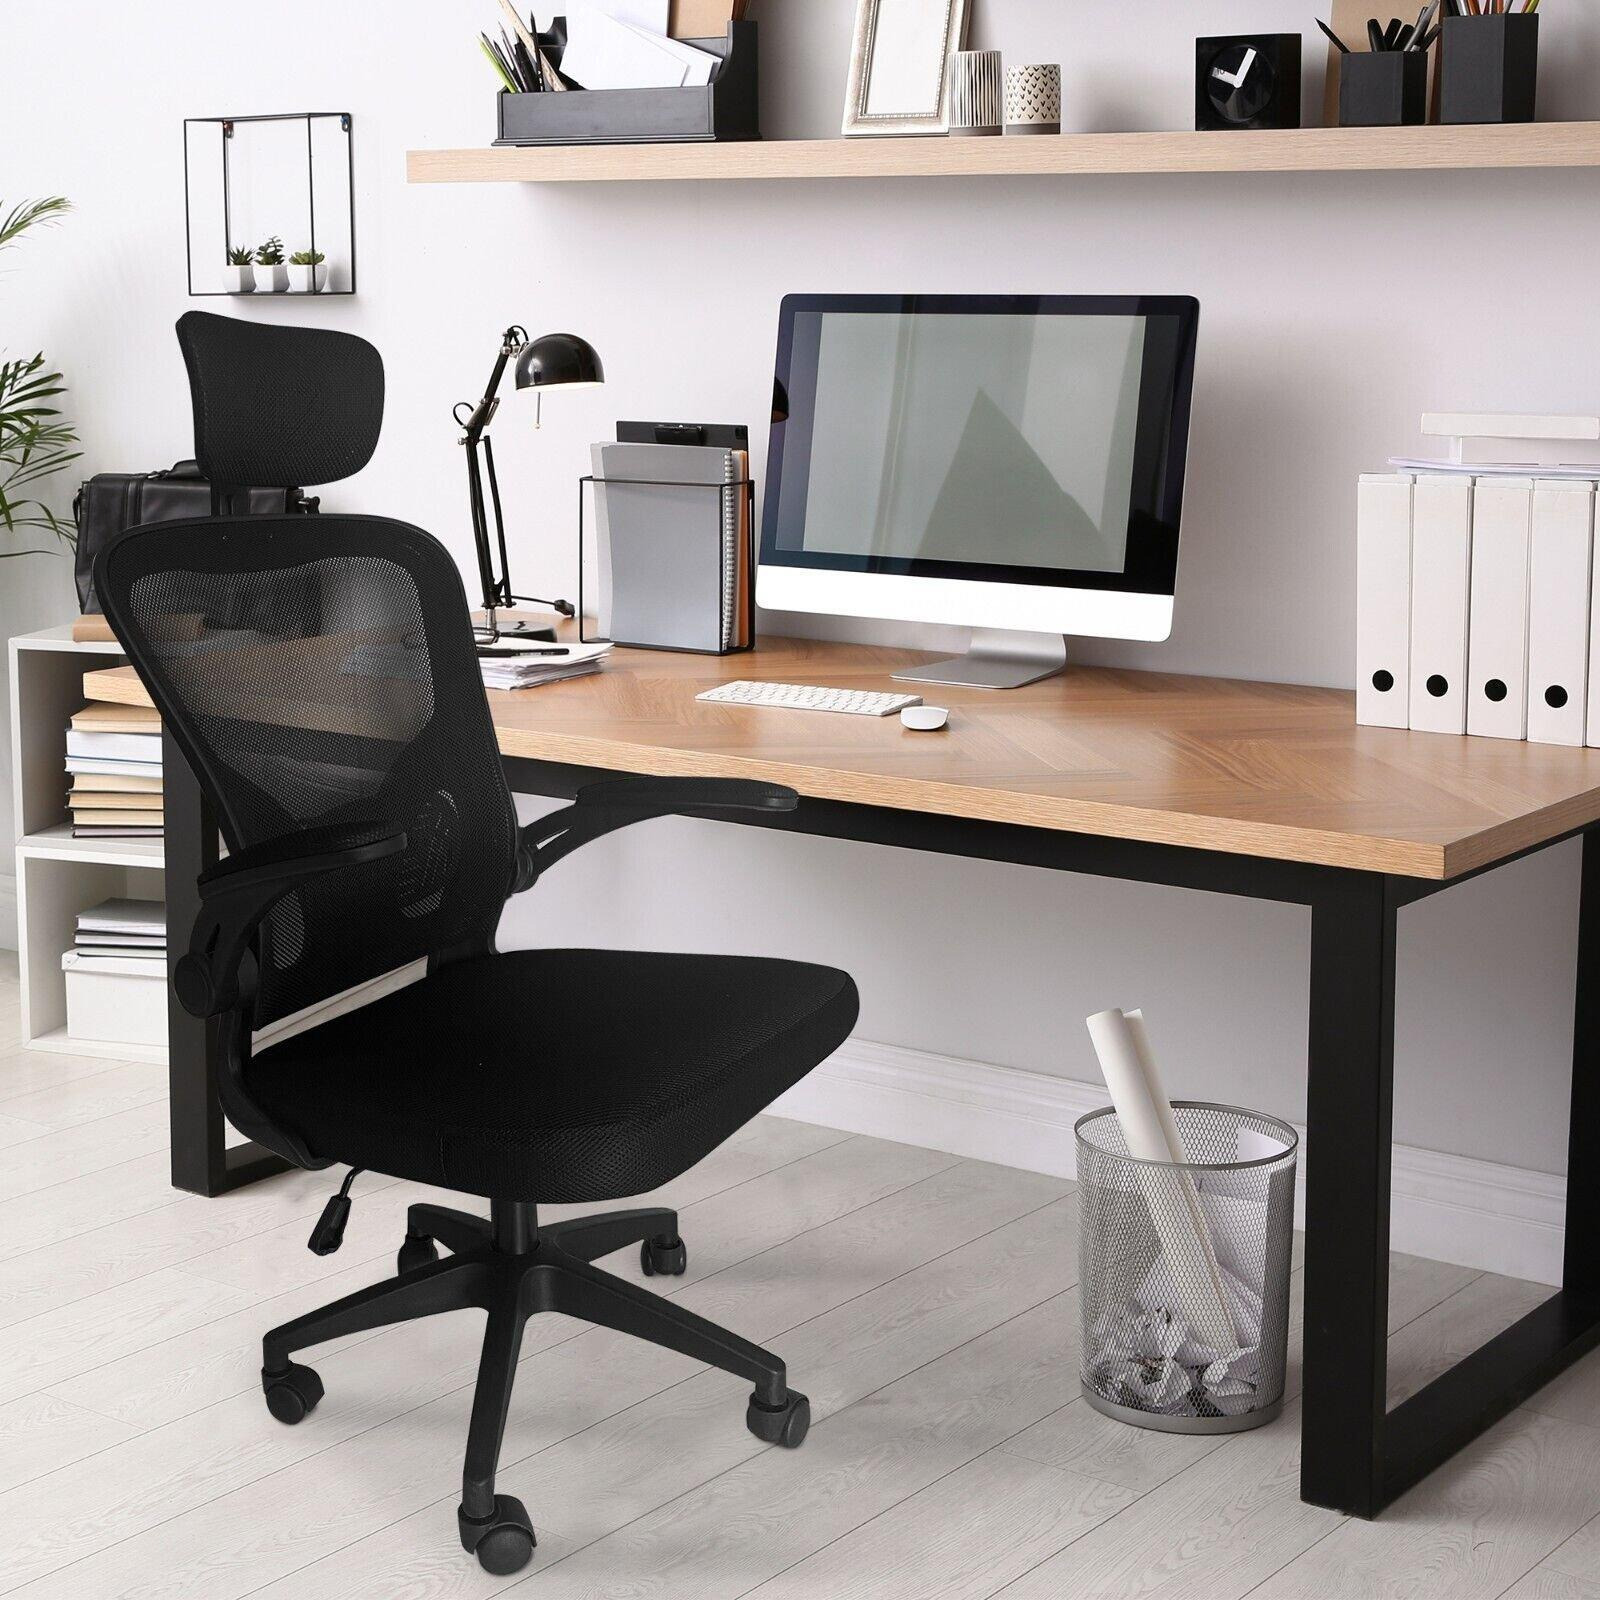 Ergonomic High Back Office Chair With Headrest Lumbar Support & Flip-UP Armrest - image 1